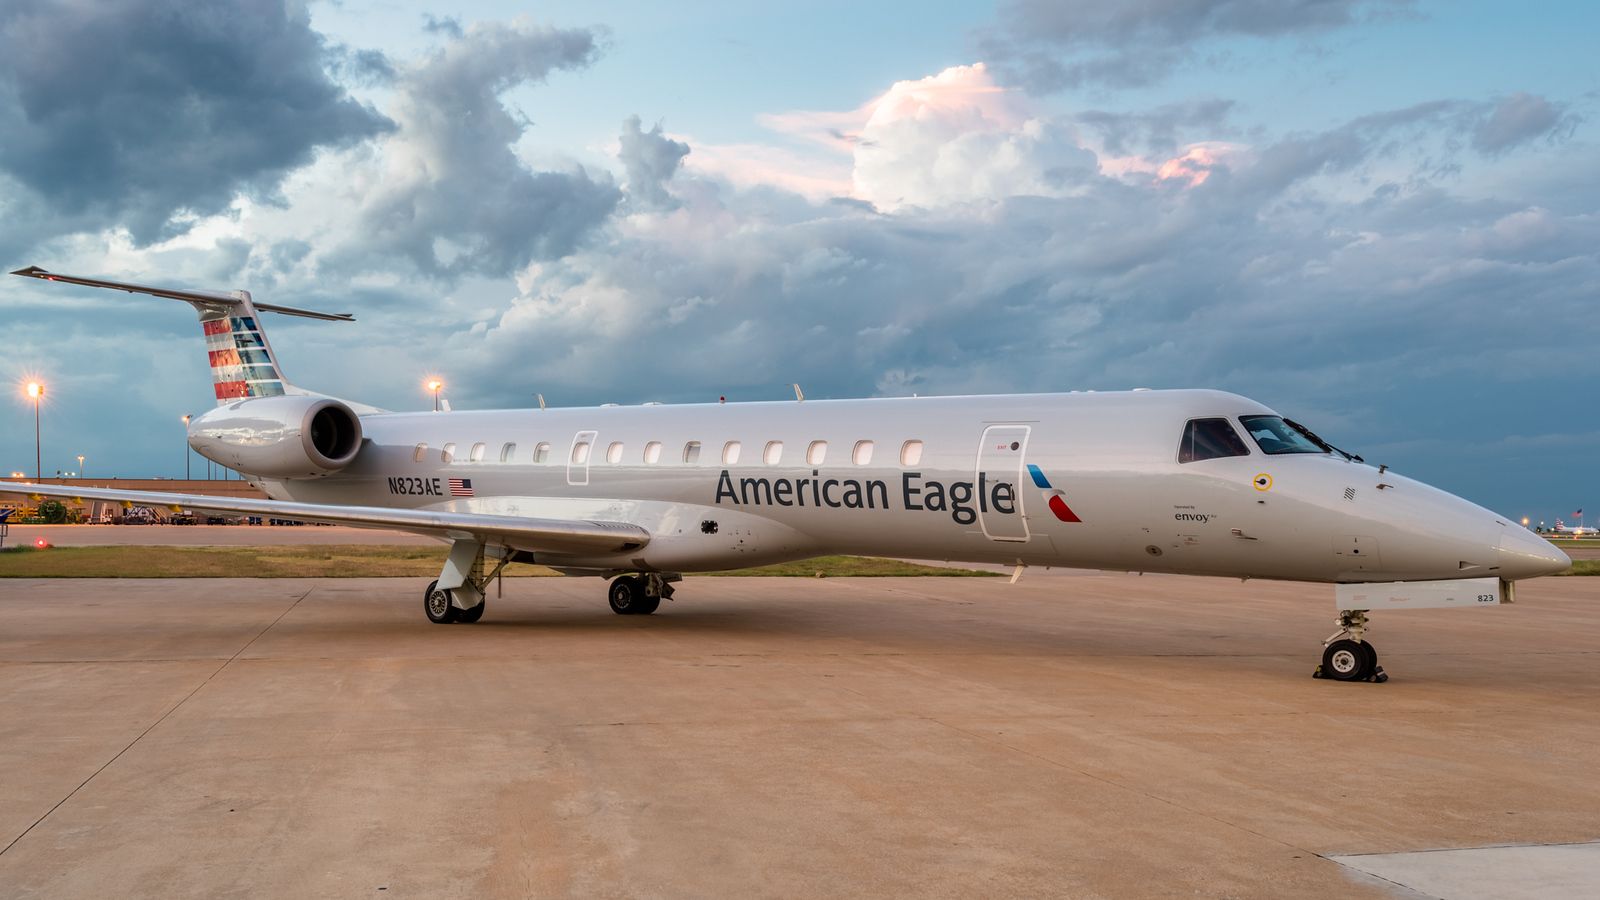 $2,000 bonus for new Envoy Flight Attendants